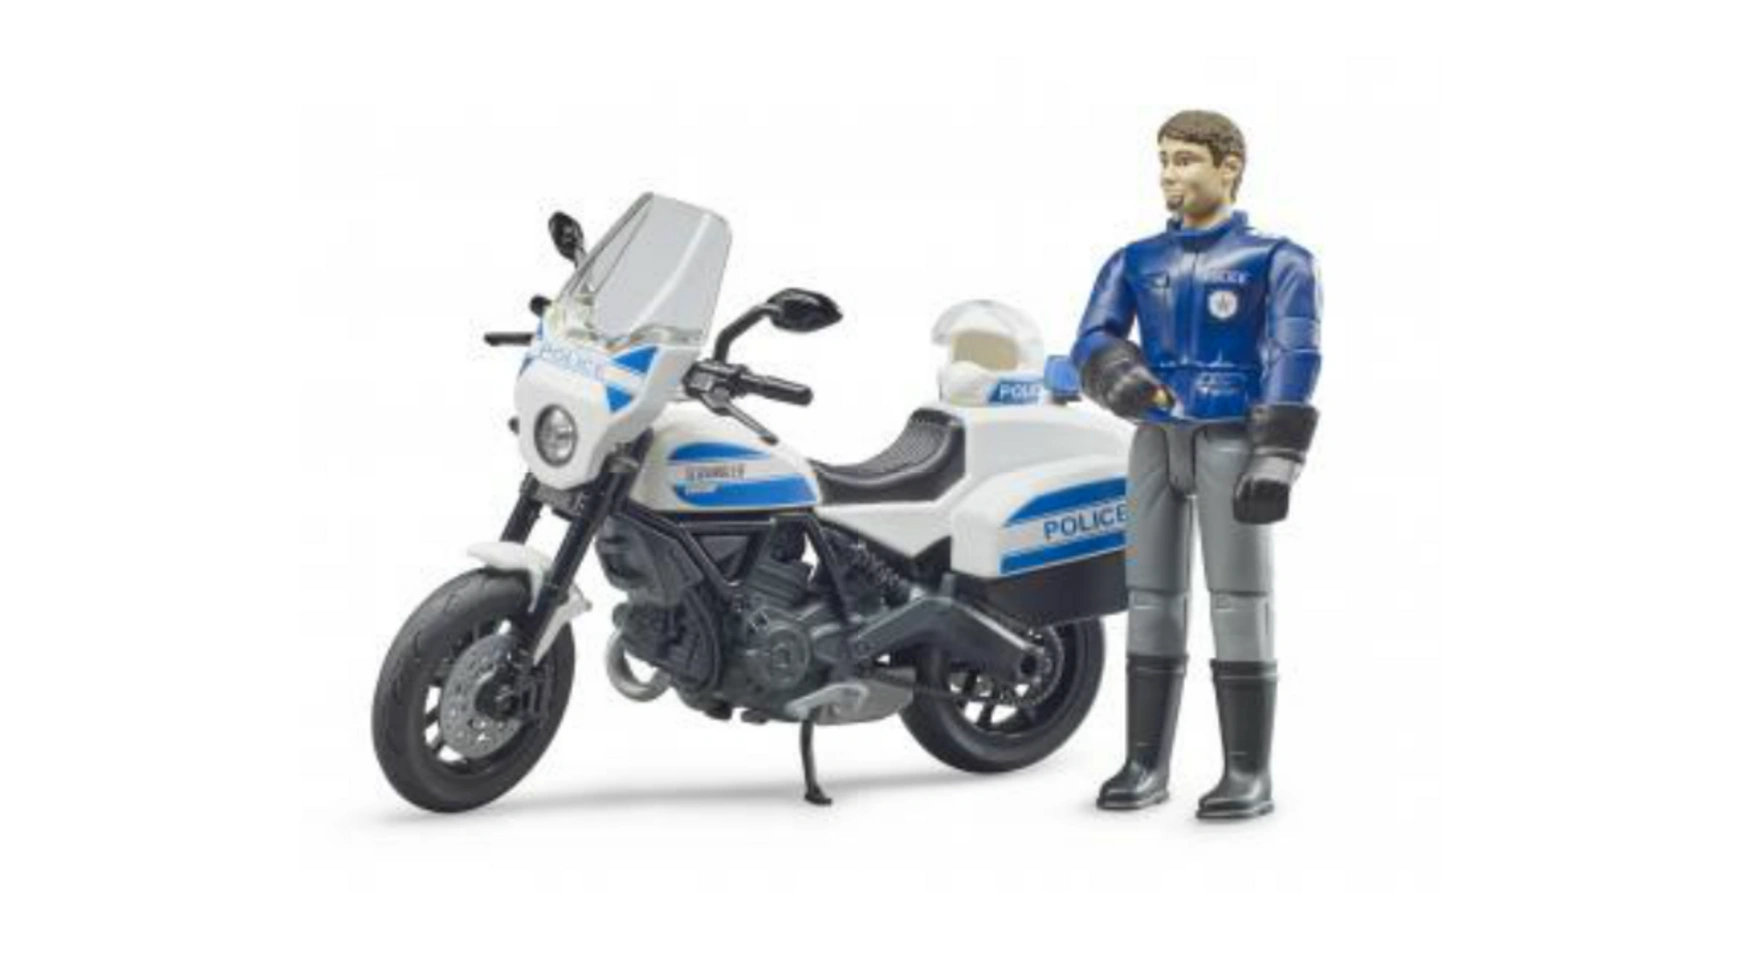 мотоцикл bruder scrambler ducati 62 731 1 16 14 см белый синий Bruder bworld Полицейский мотоцикл Scrambler Ducati